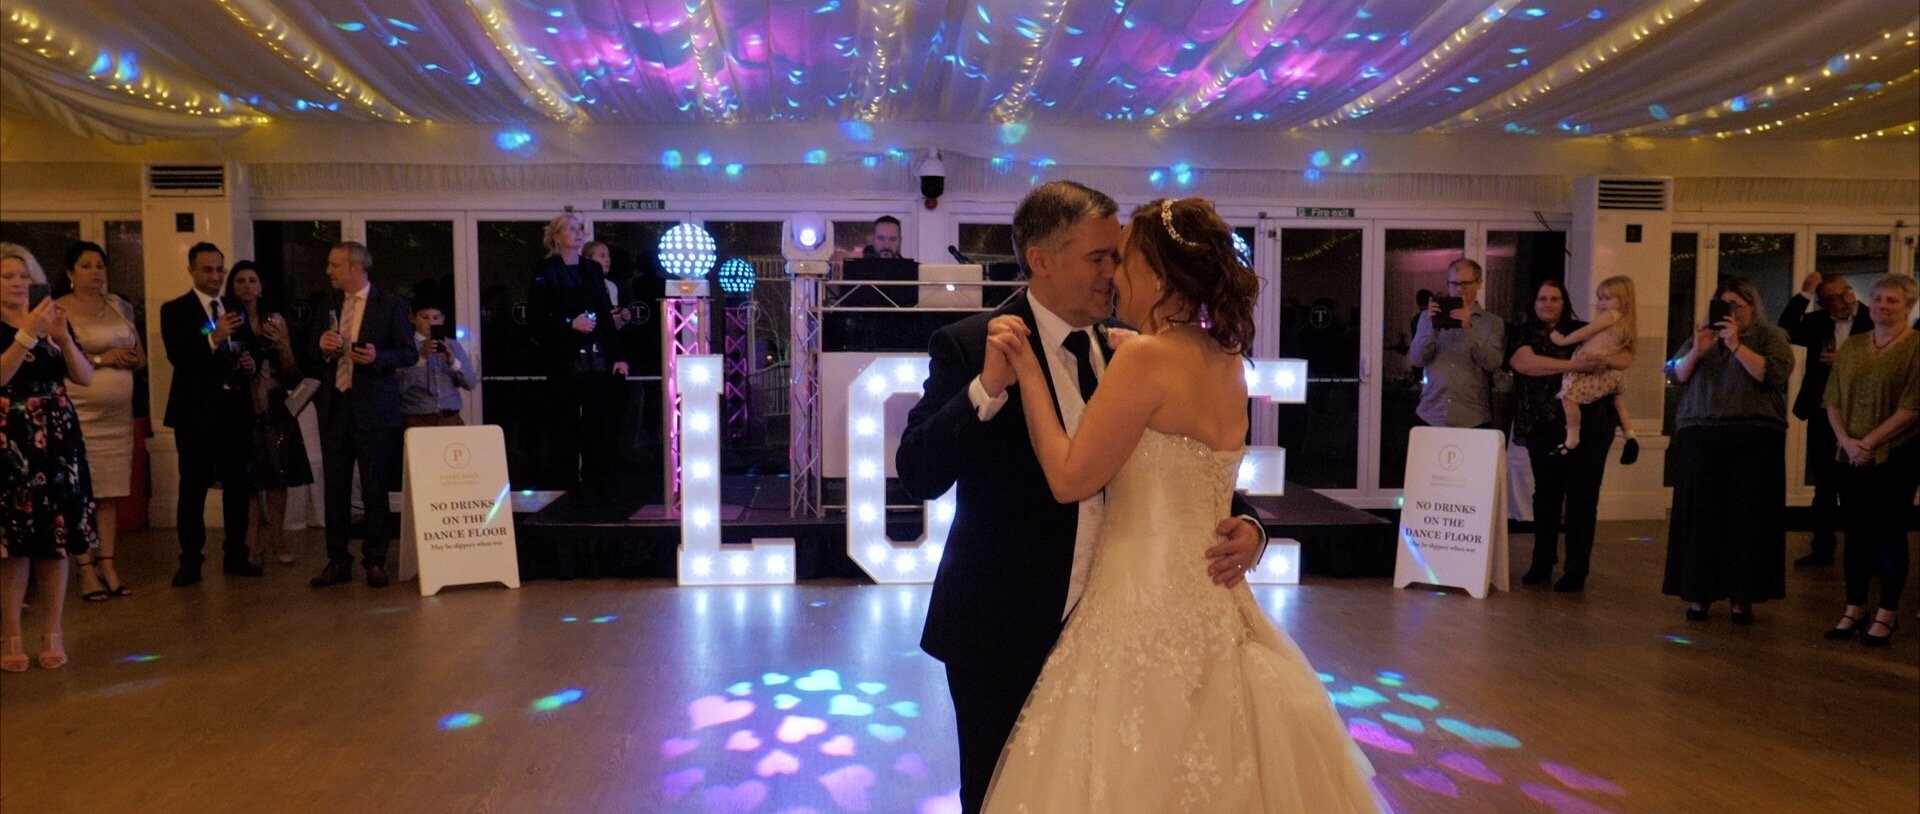 First Dance wedding videography Essex.jpg